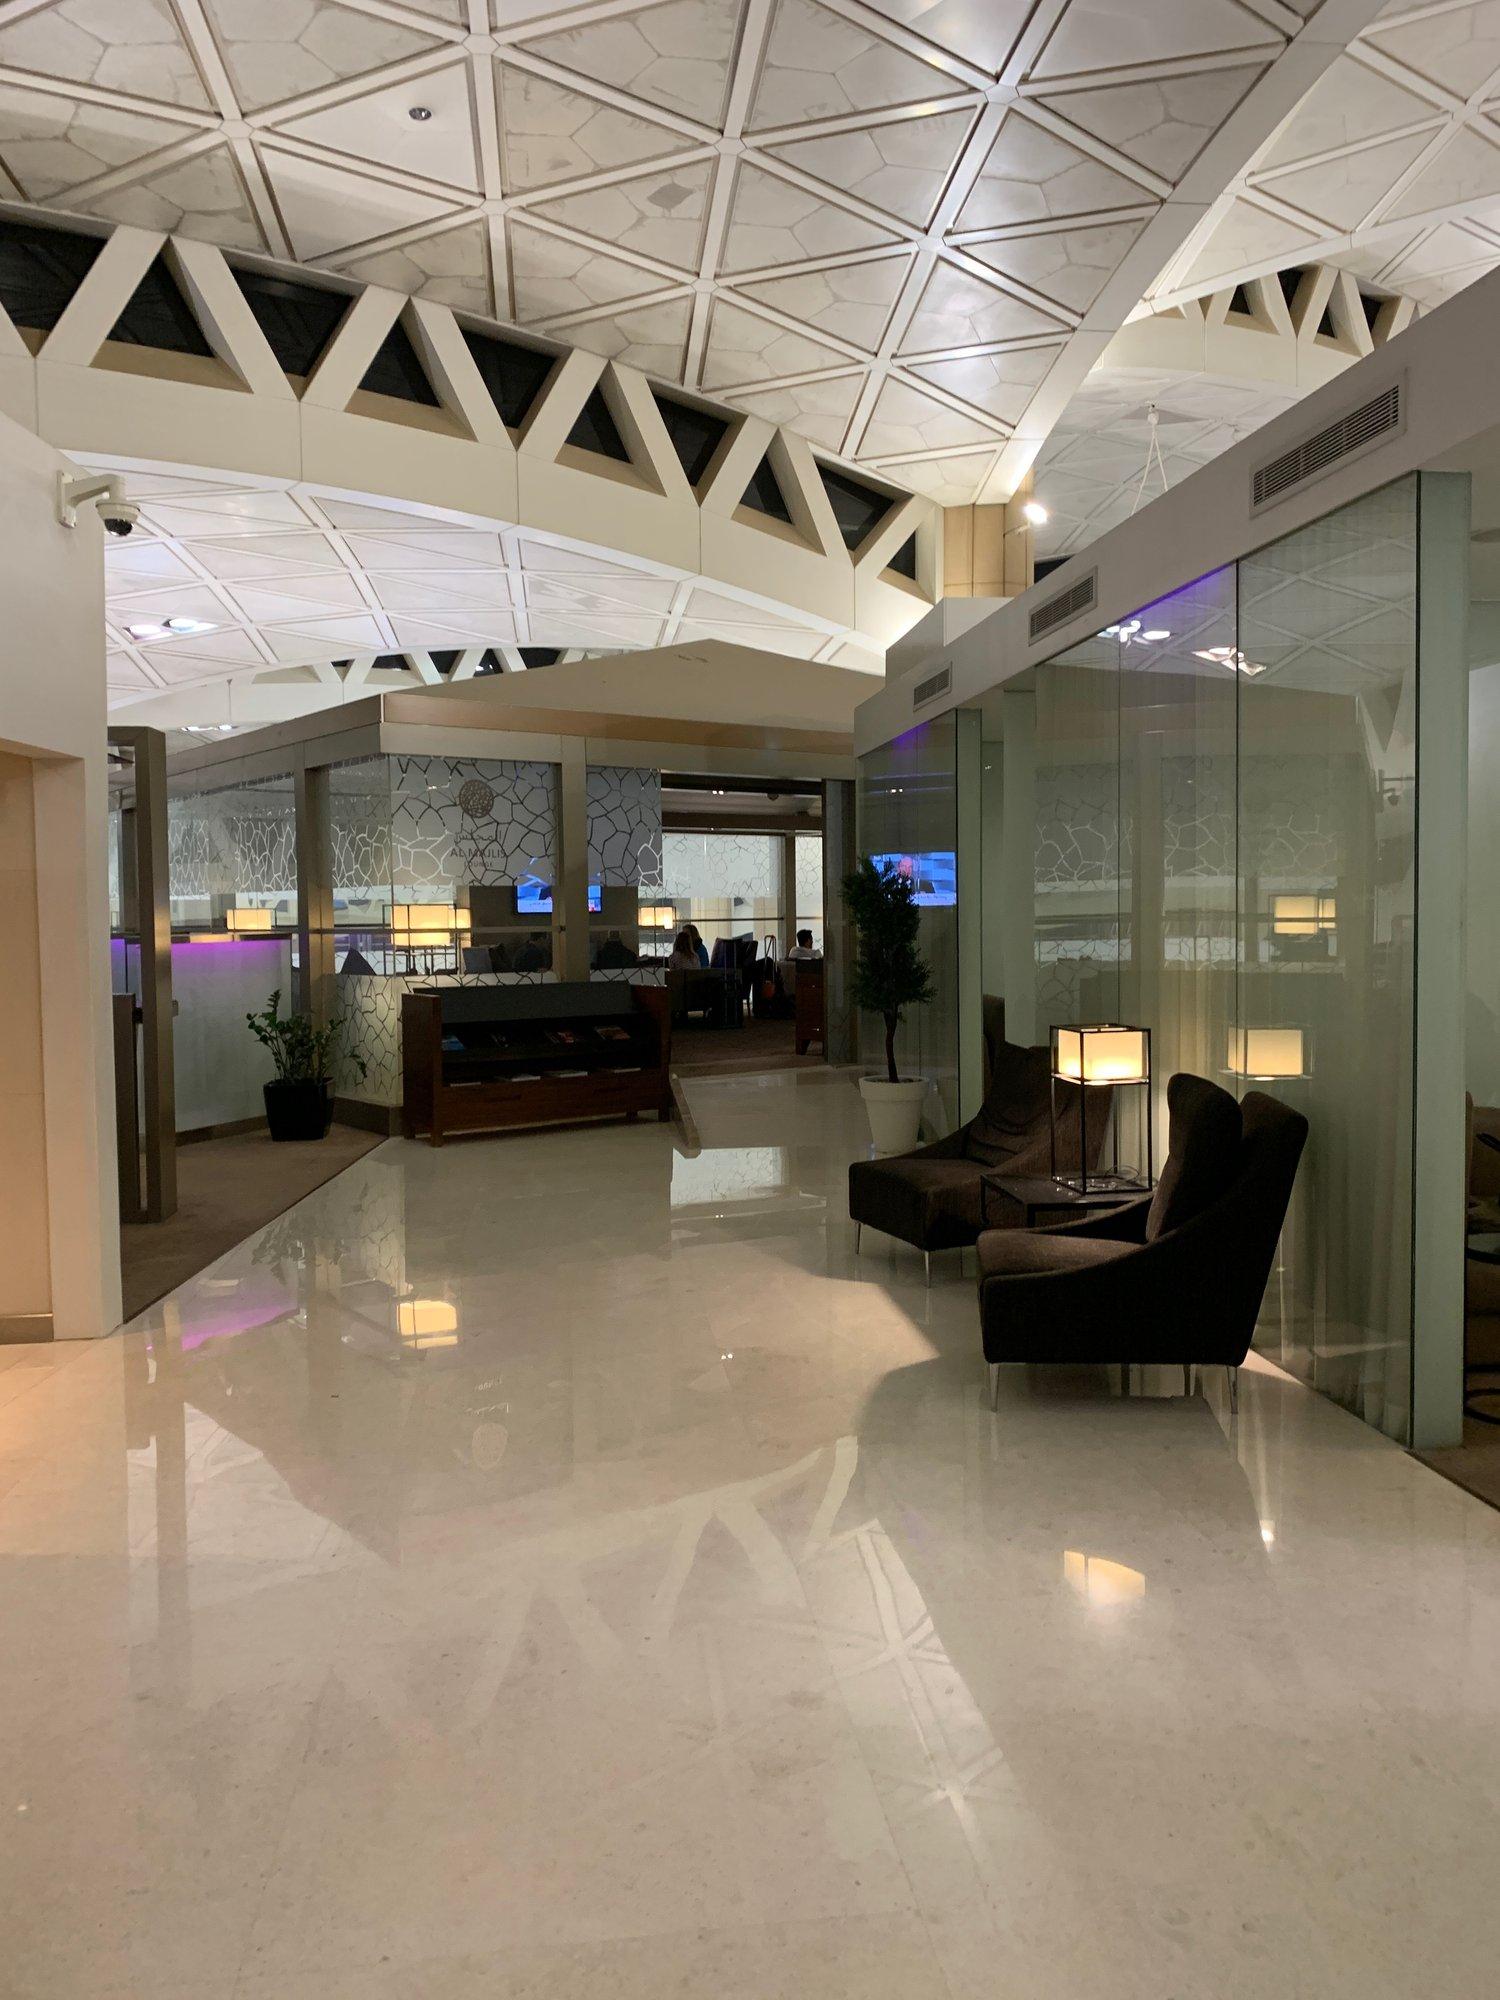 Saudia Al-Fursan Golden Business Lounge (International) image 9 of 9